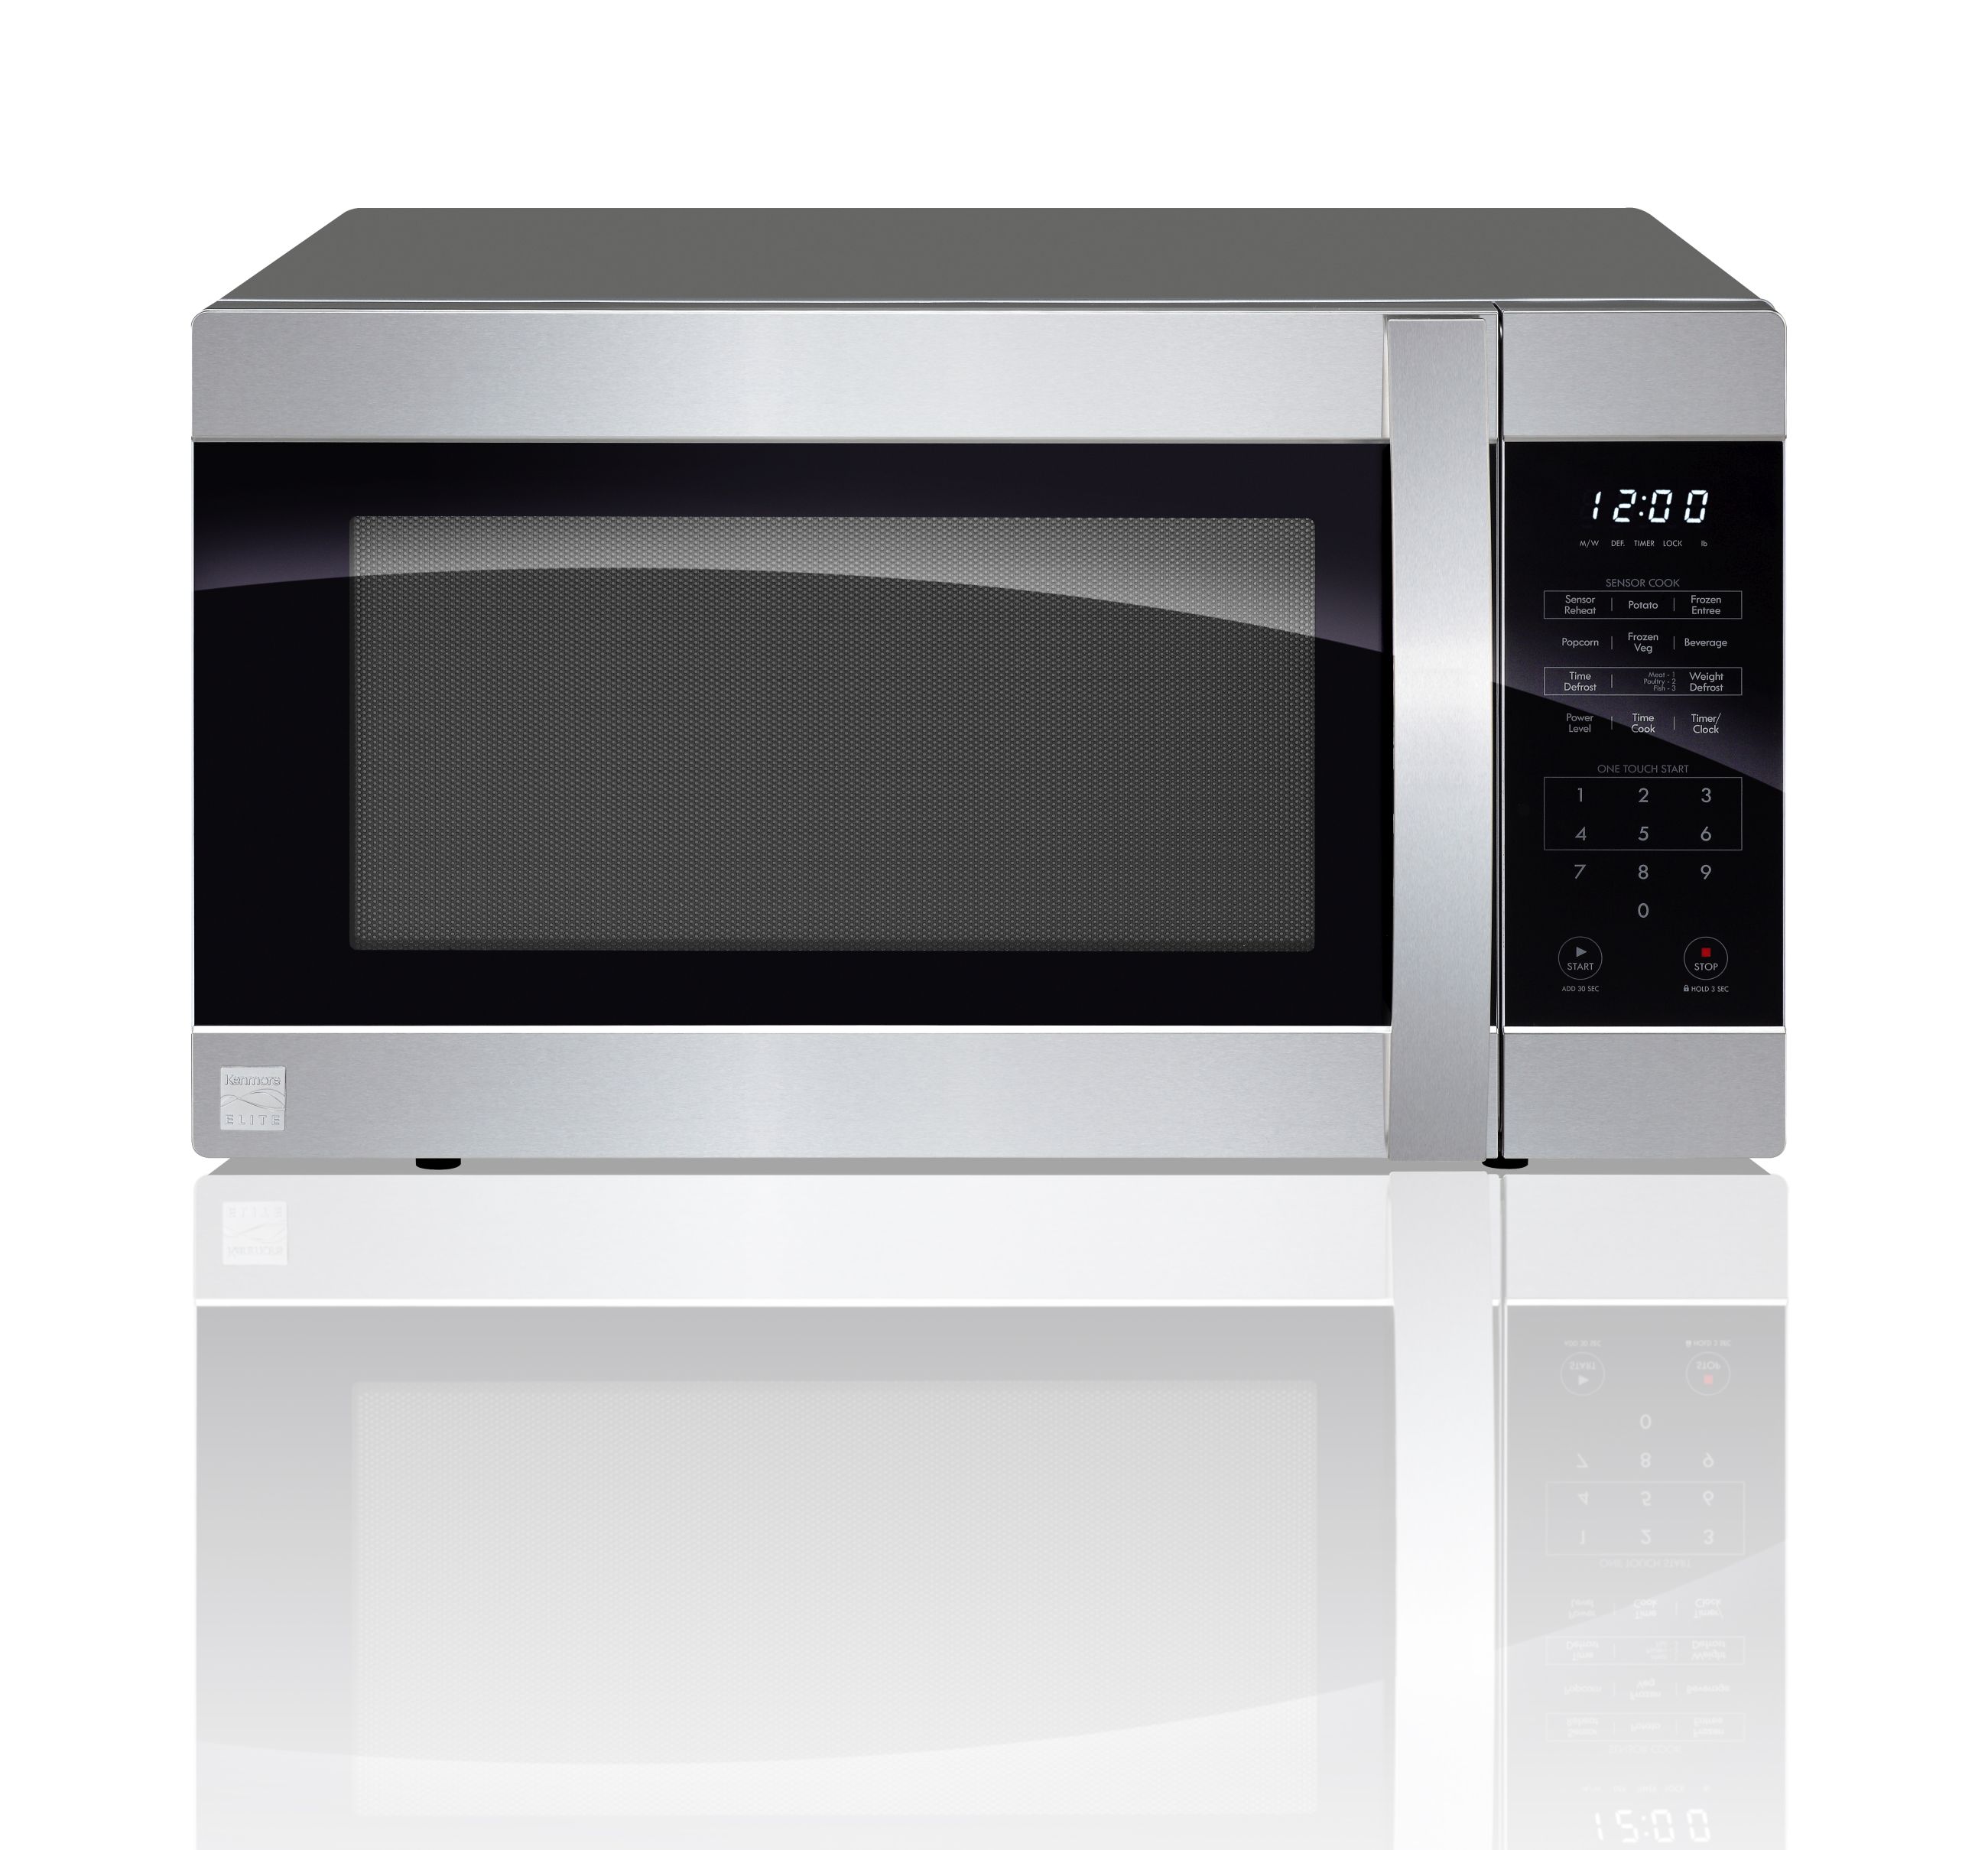 Kenmore Elite 72213 2.2 cu. ft. Countertop Microwave Oven - Stainless Steel